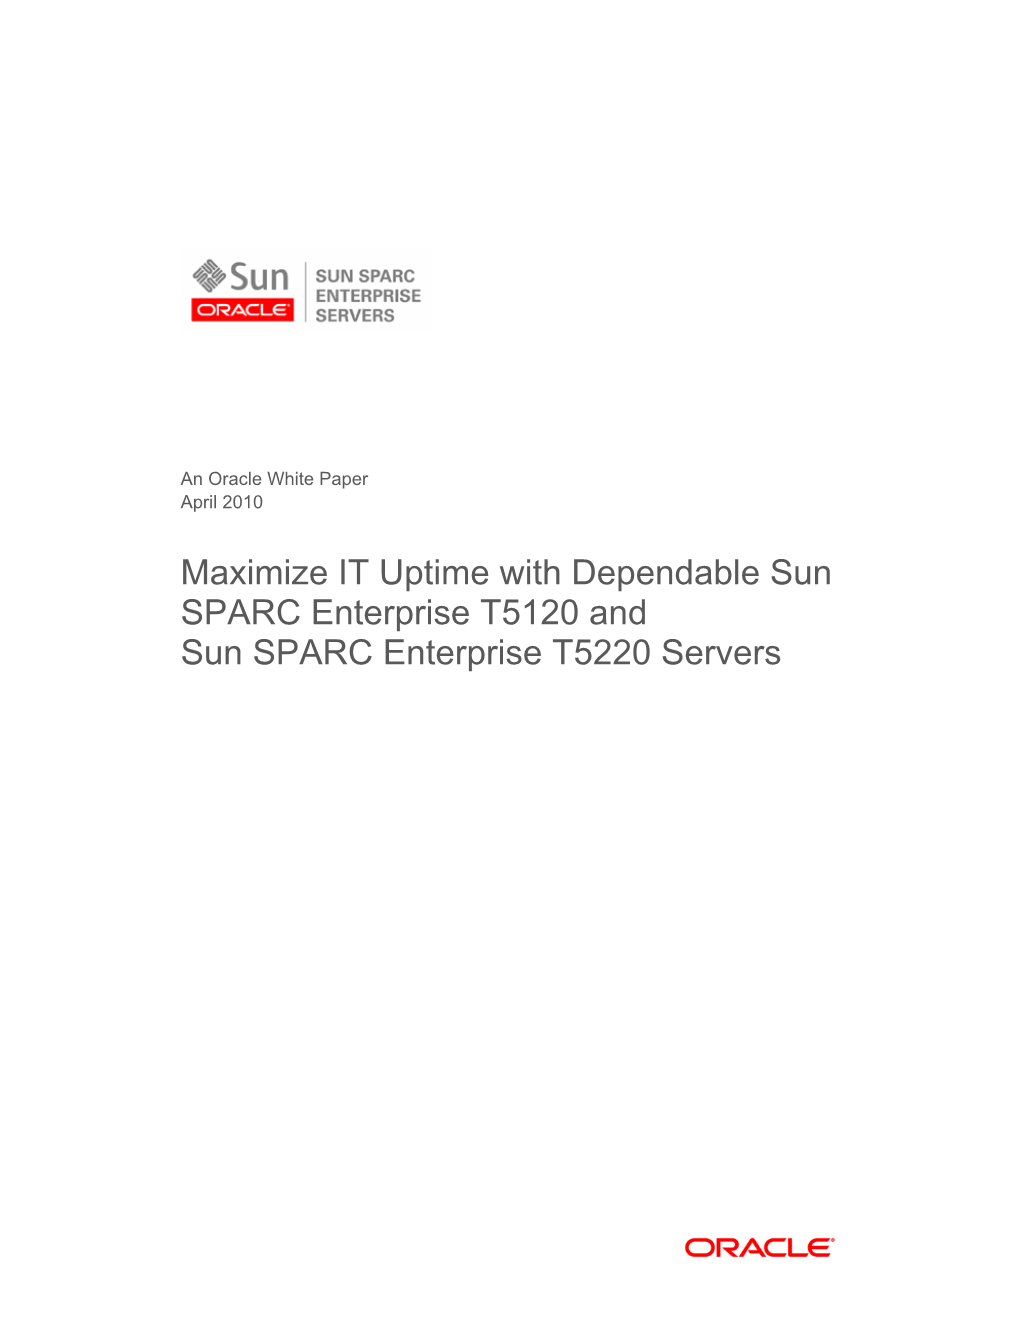 Maximize IT Uptime with Dependable Sun SPARC Enterprise T5120 and Sun SPARC Enterprise T5220 Servers